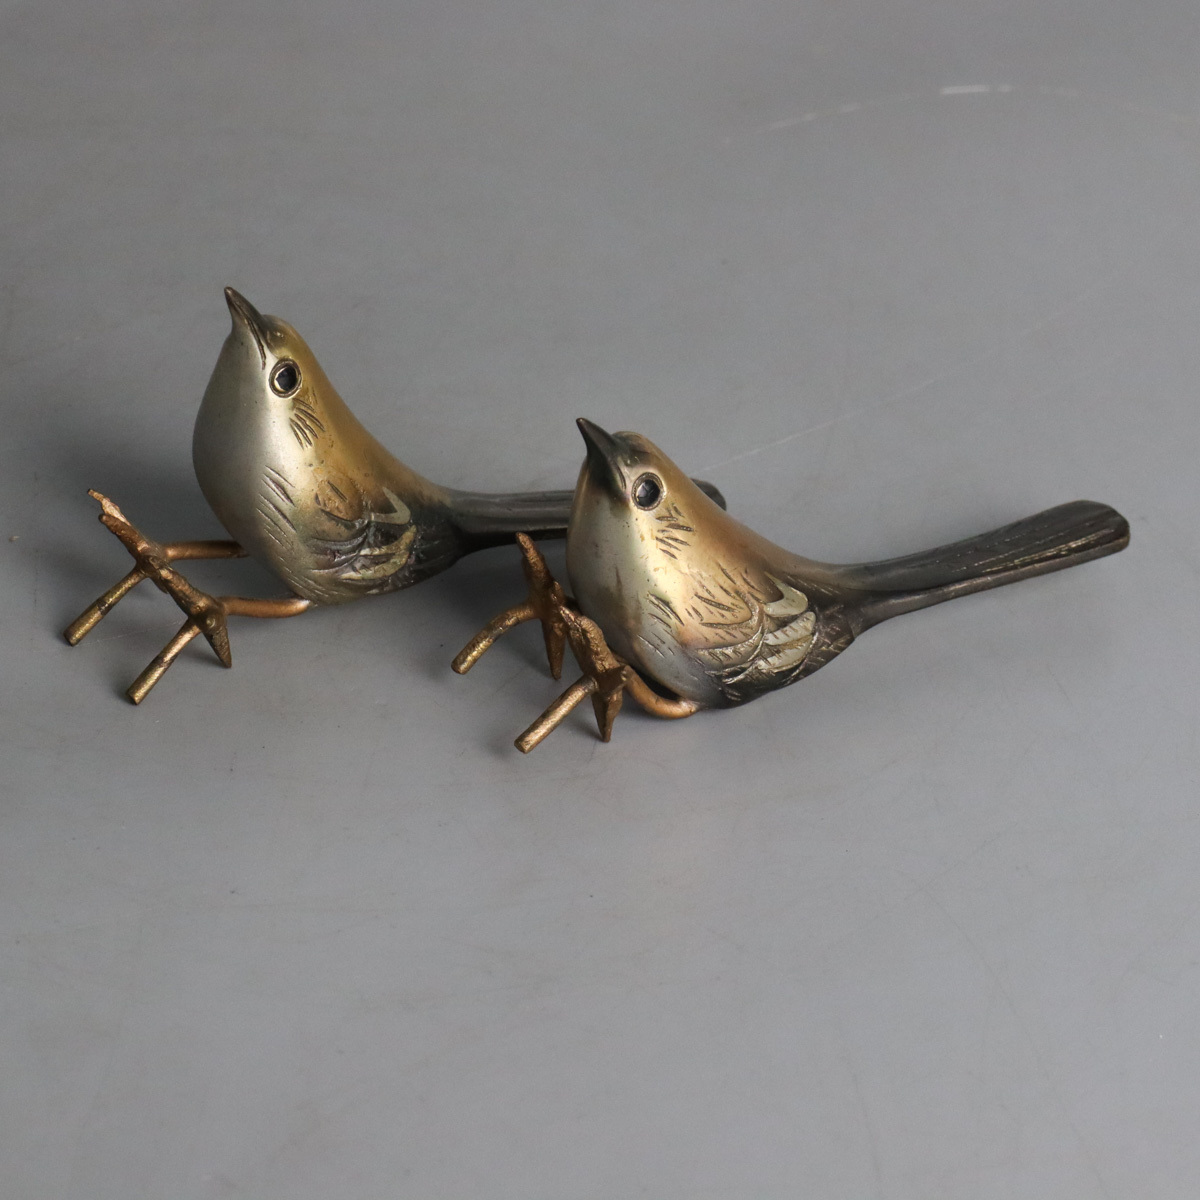 【宙】金工師 秀山作「鶯双に梅」鋳銅 鳥像 幅39.6cm 2192g 共箱 床置 置物 オブジェ C1D13.l.E_画像3